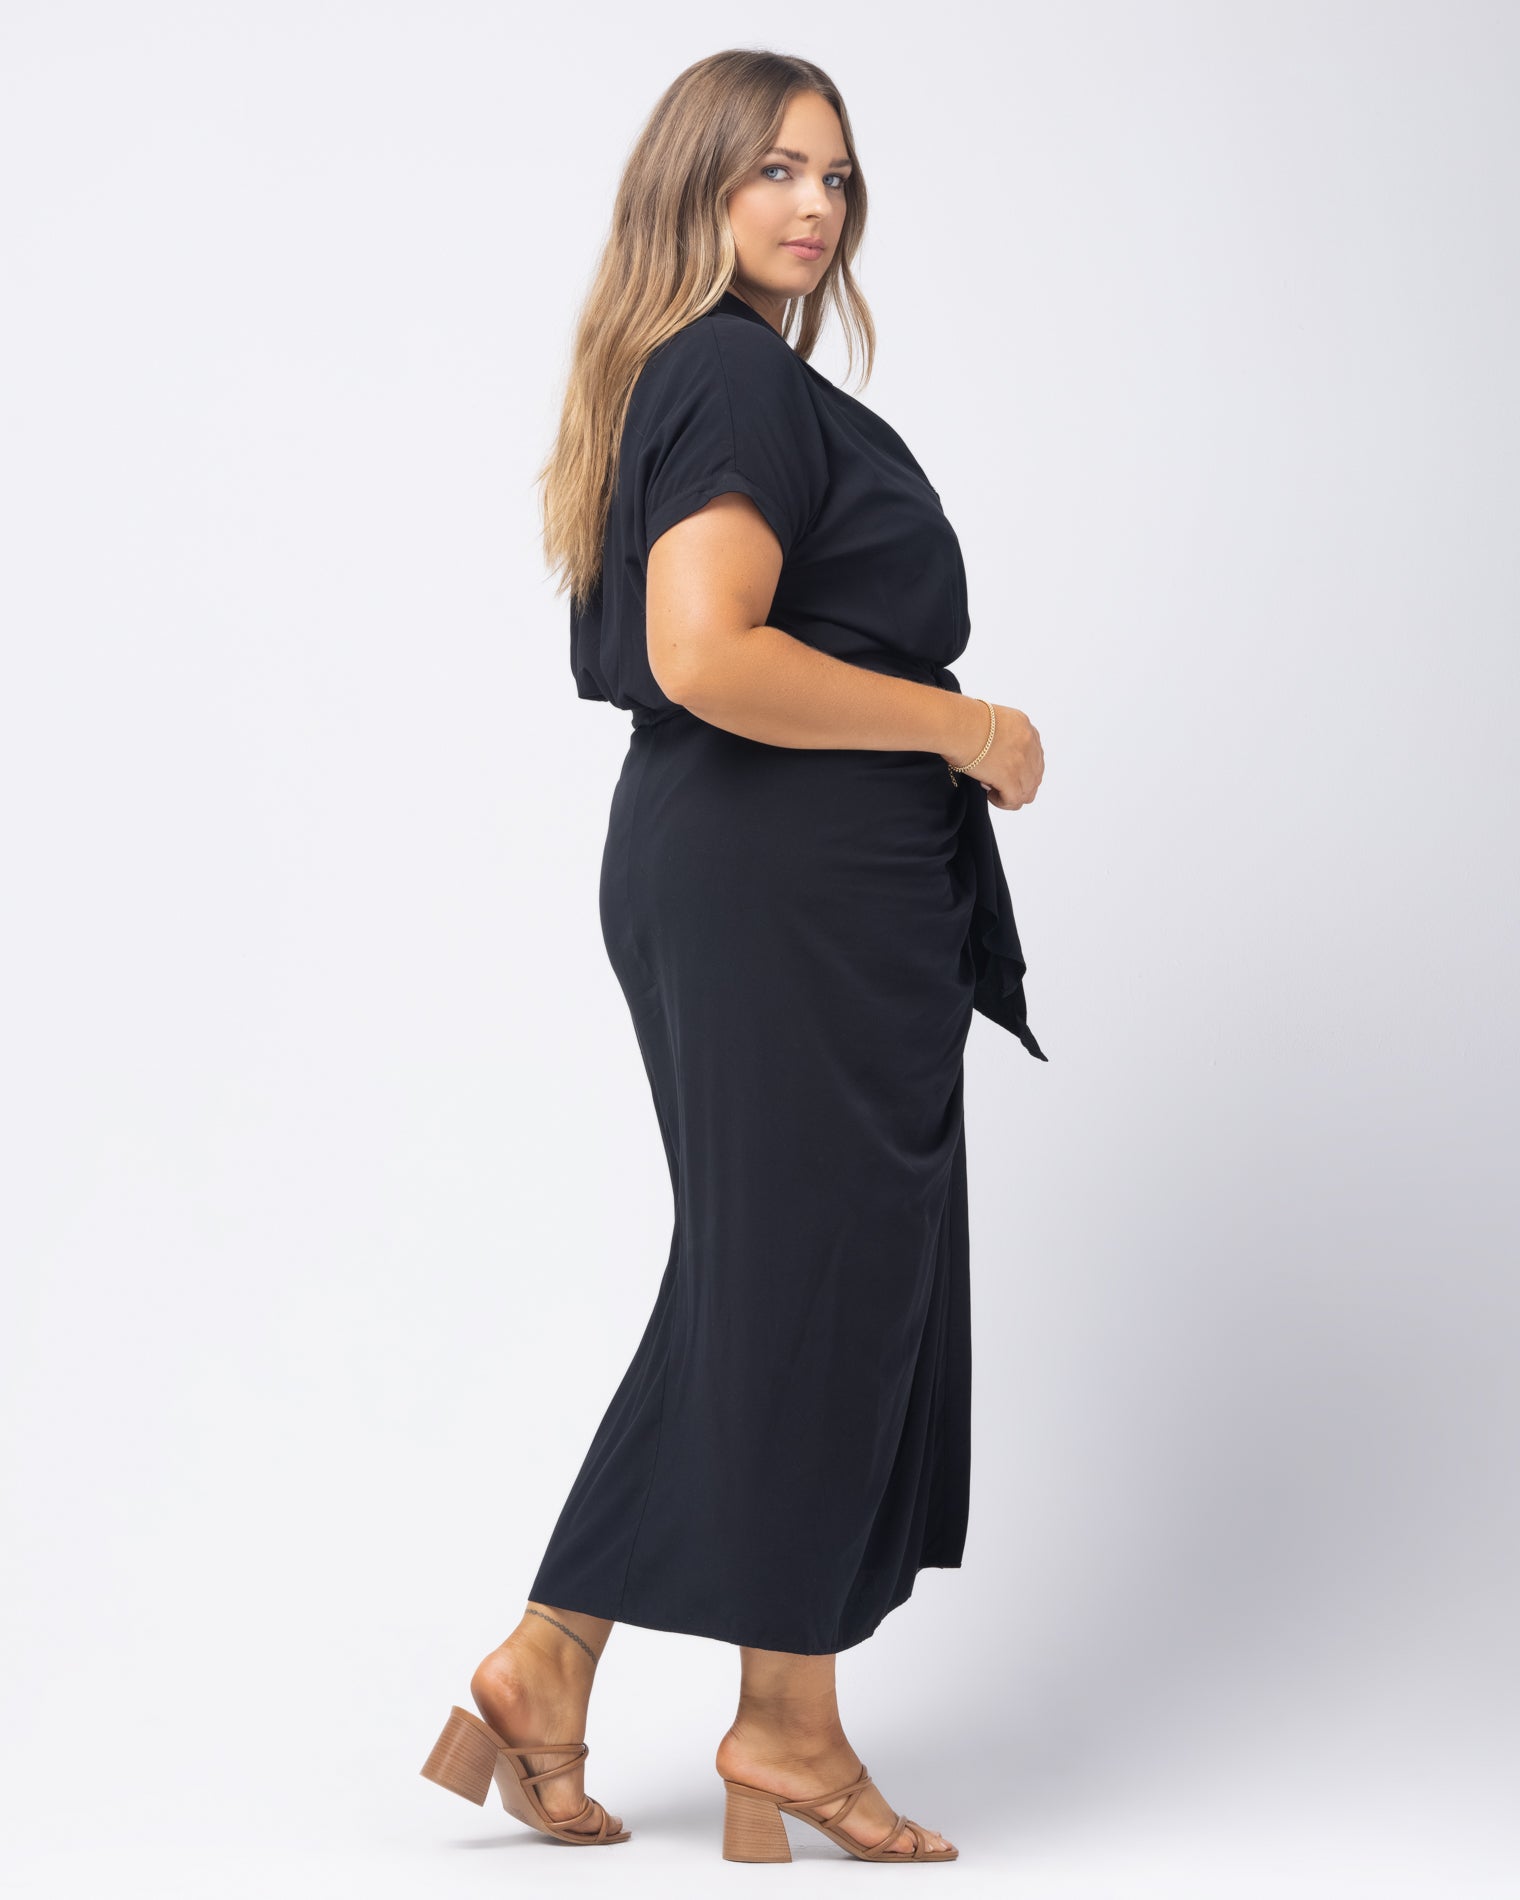 Prism Dress Black | Model: Ali (size: XL) | Hover